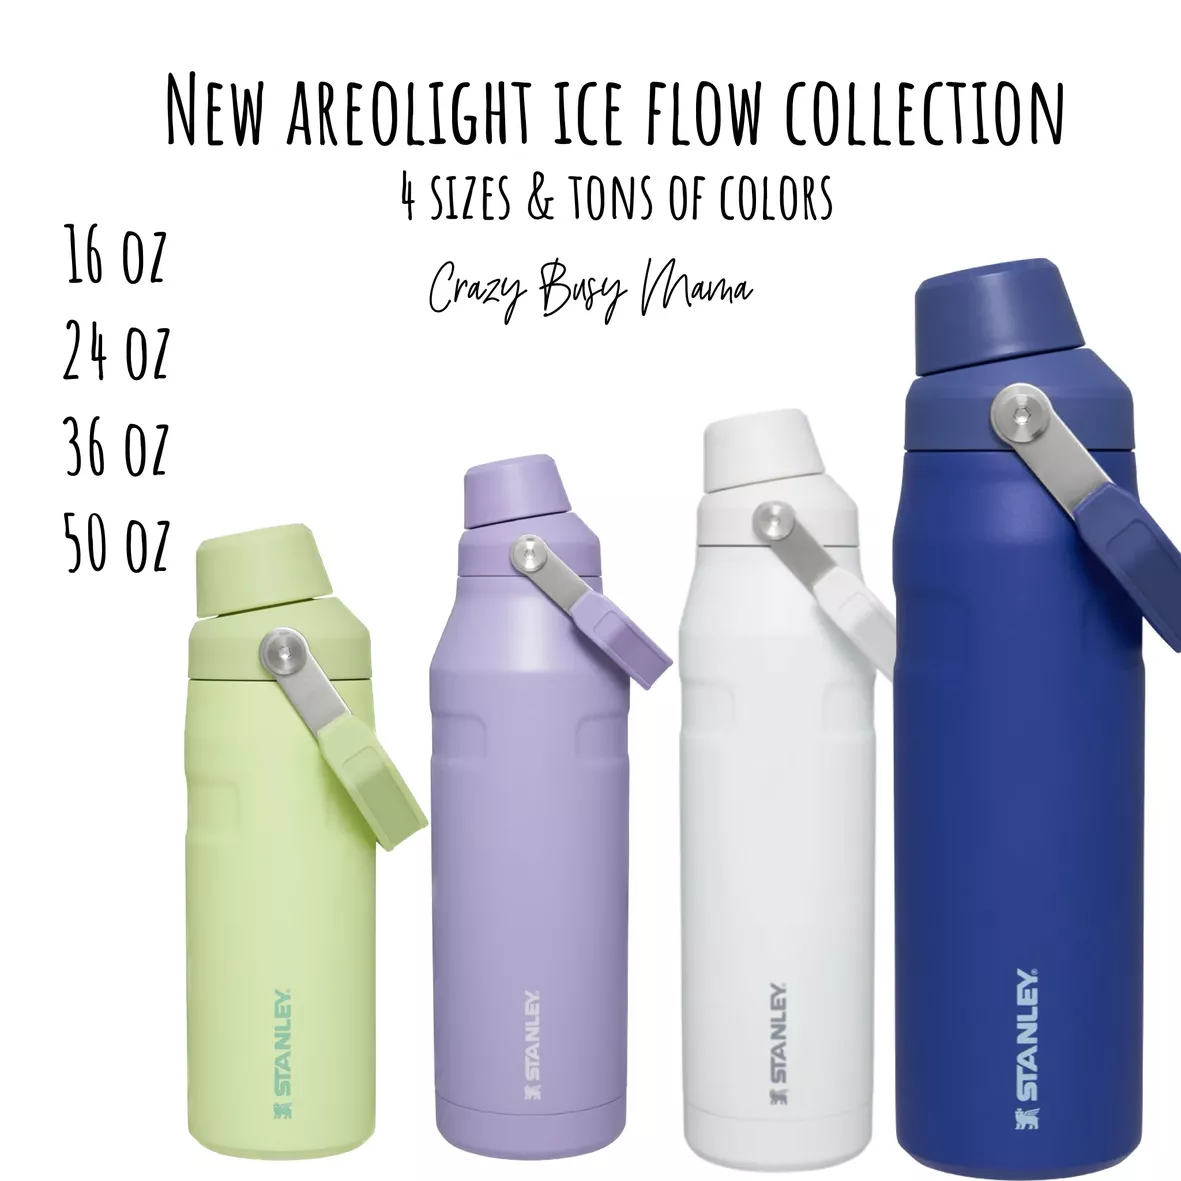 Stanley 36 oz. AeroLight IceFlow Bottle with Fast Flow Lid